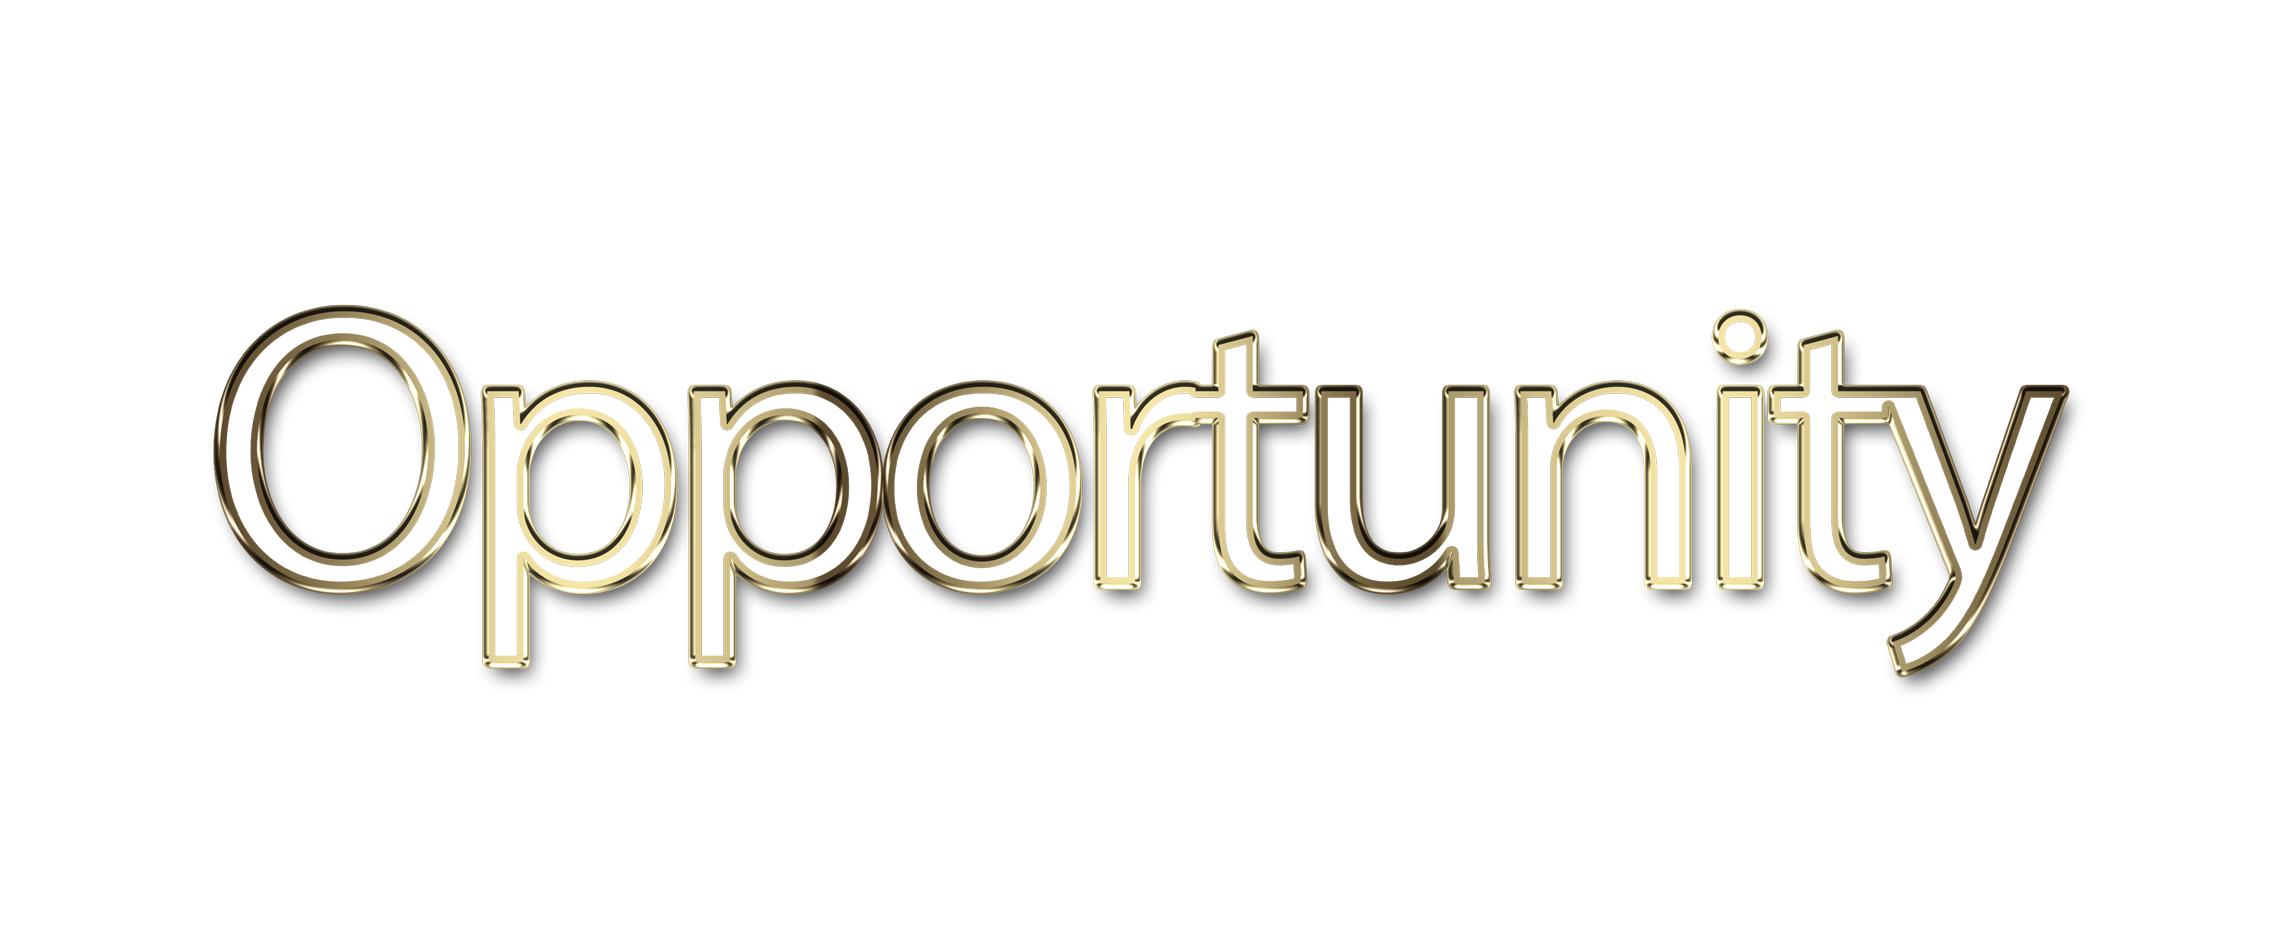 Opportunity png, word Opportunity png, Opportunity word png, Opportunity text png, Opportunity letters png, Opportunity word art typography PNG images, transparent png